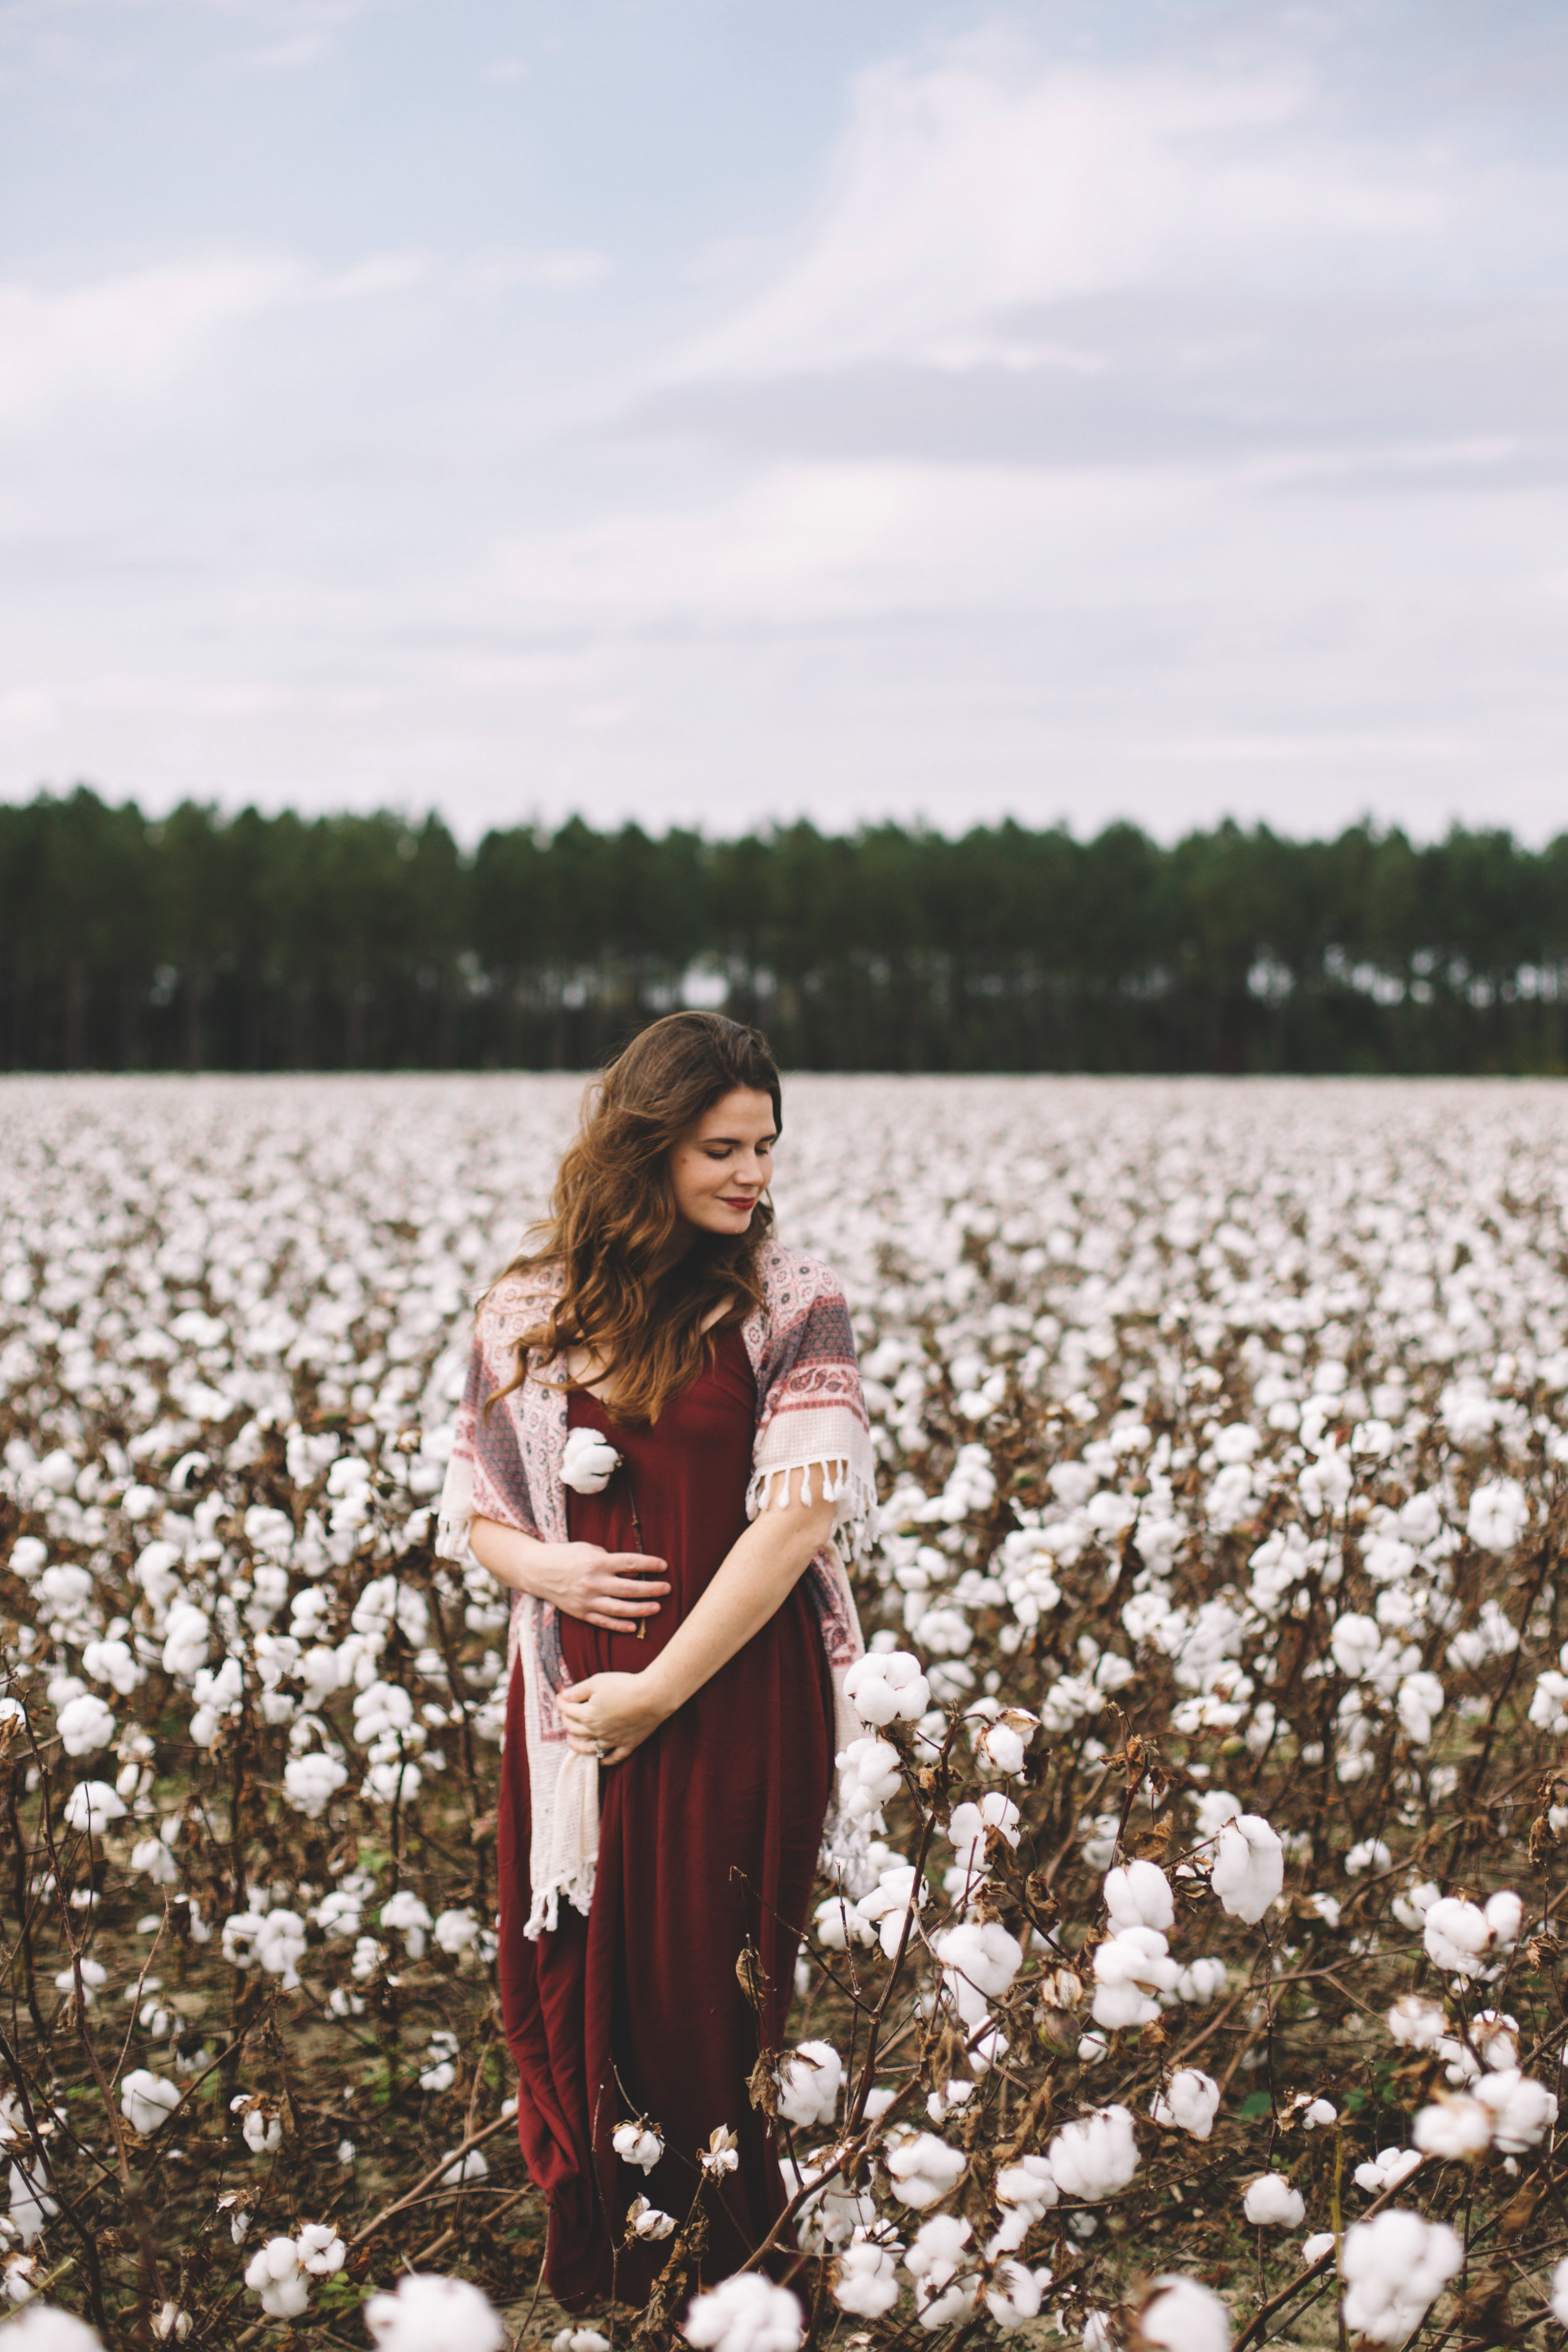 Cotton Field Maternity 17 Weeks  (28 of 28).jpg